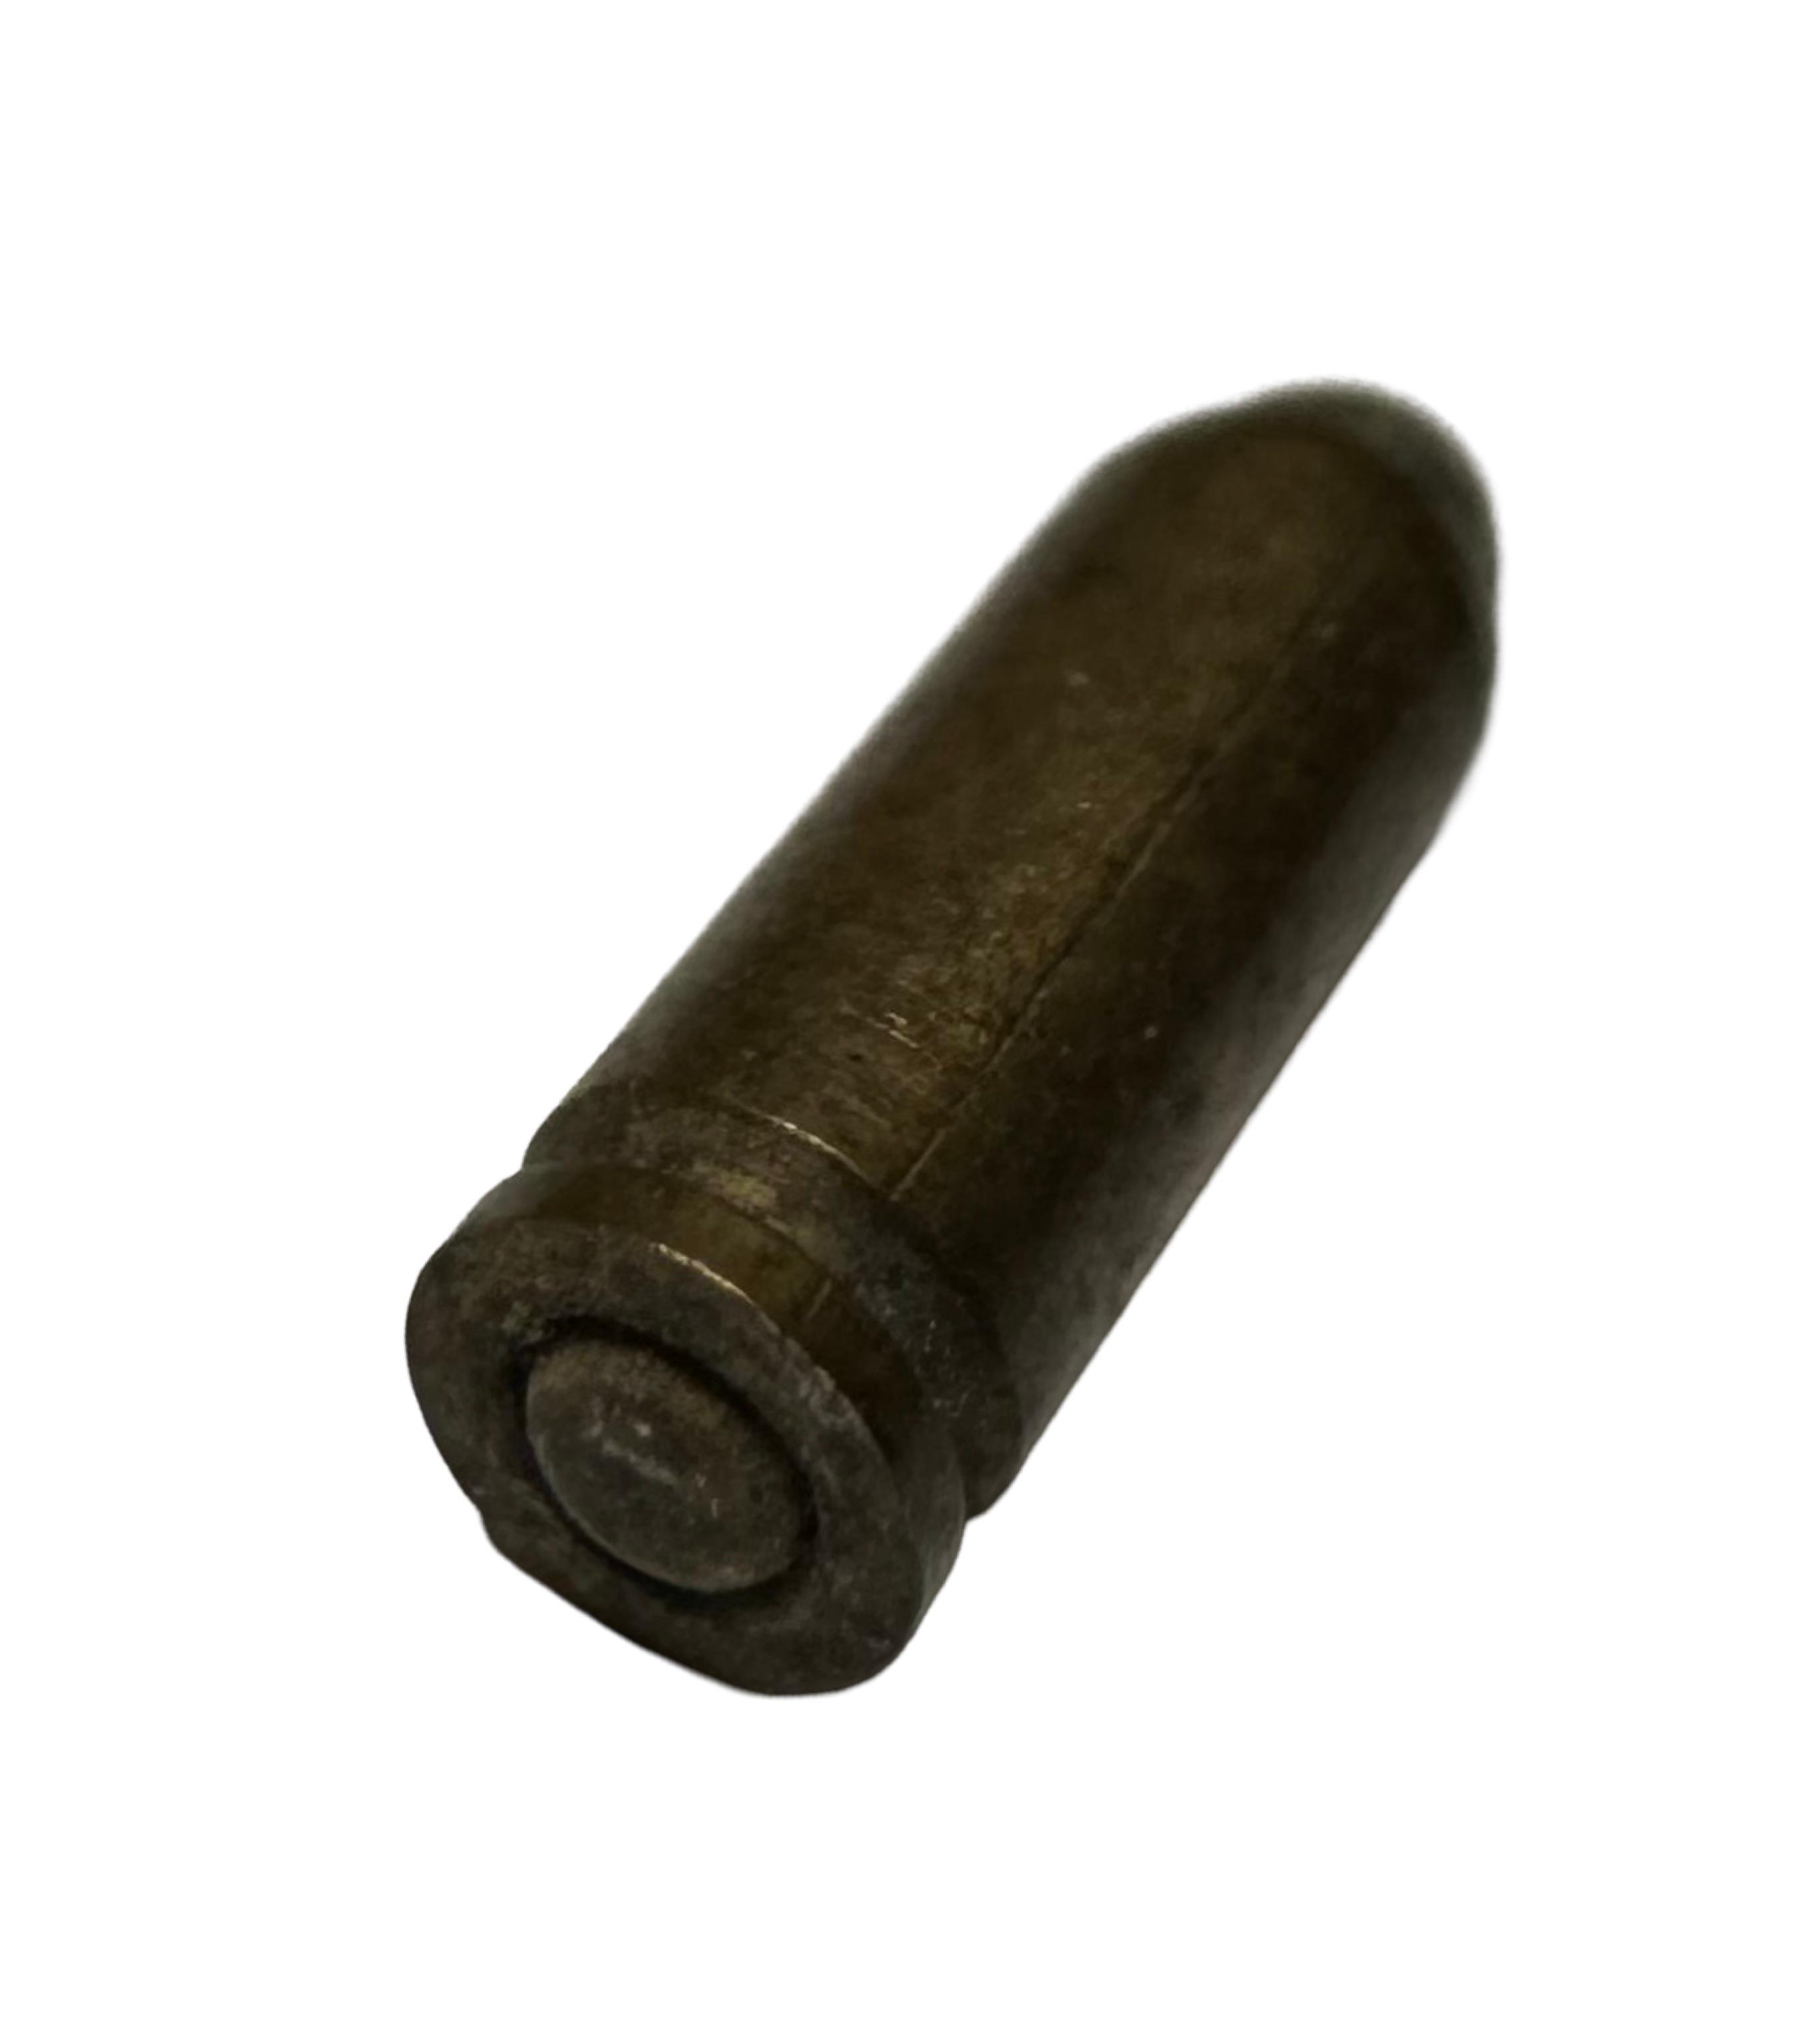 RARE 2.7mm Kolibri Auto Cartridge